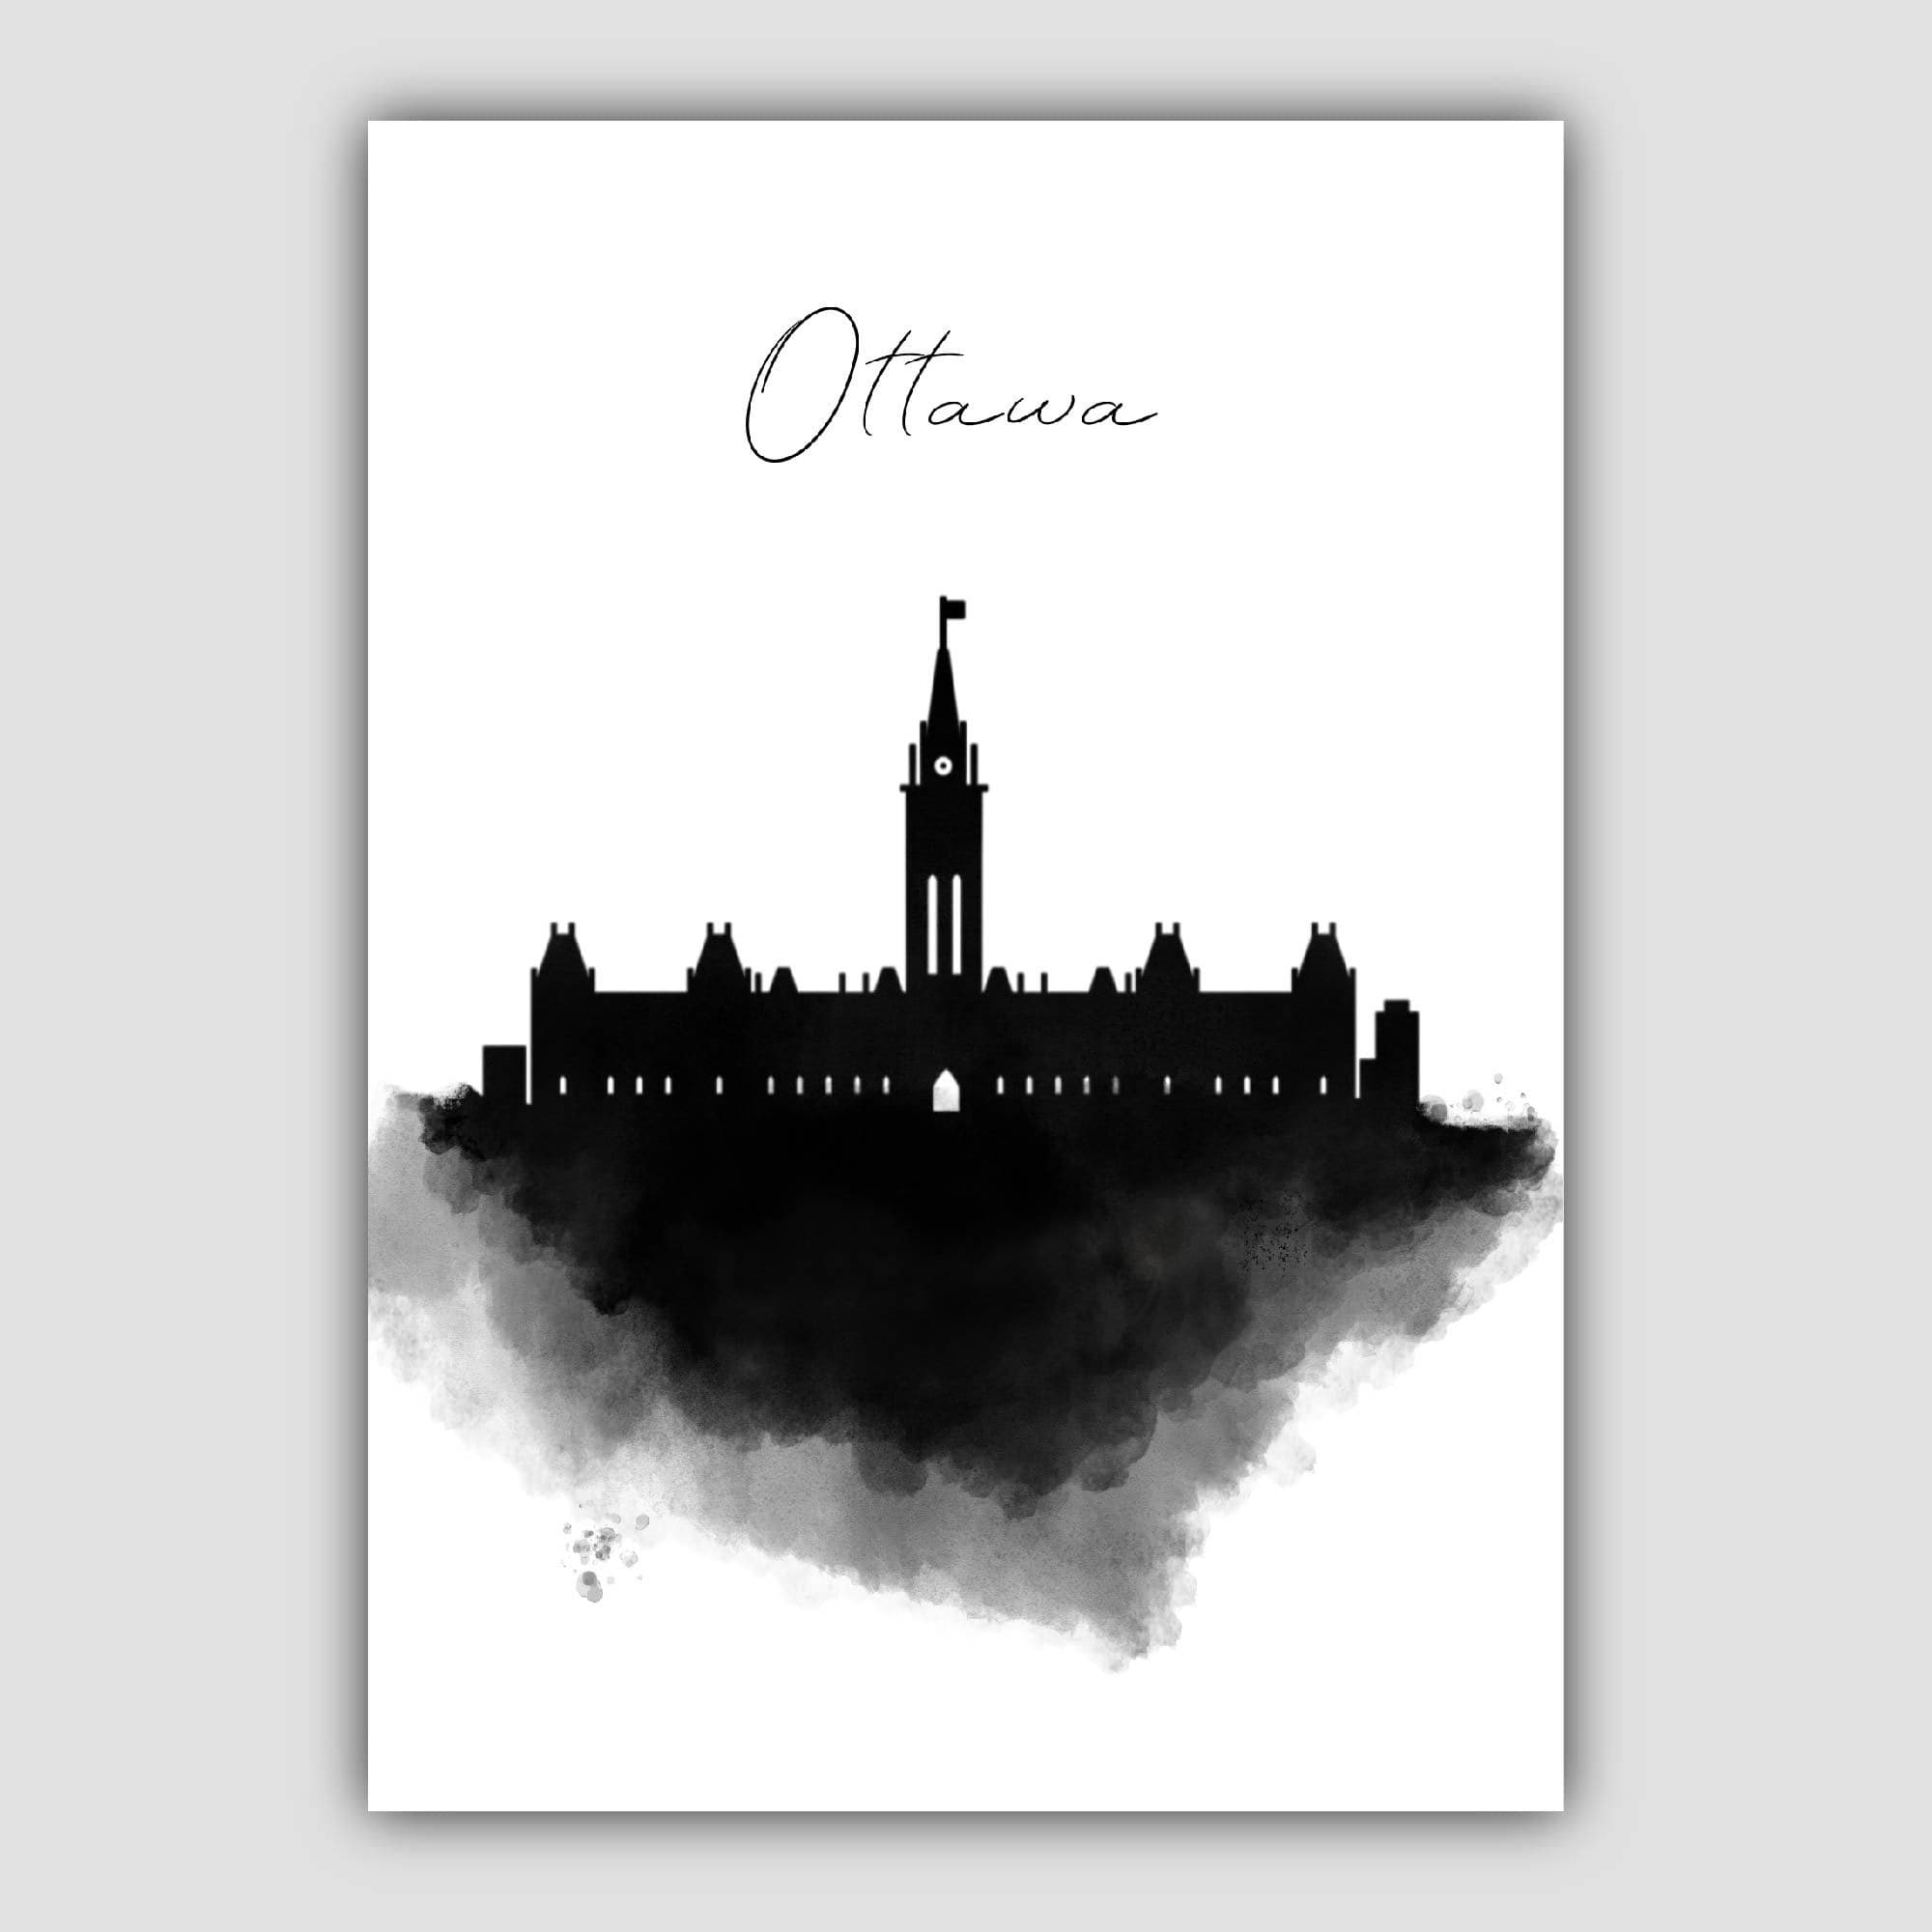 Ottawa Watercolour Skyline Cityscape Print